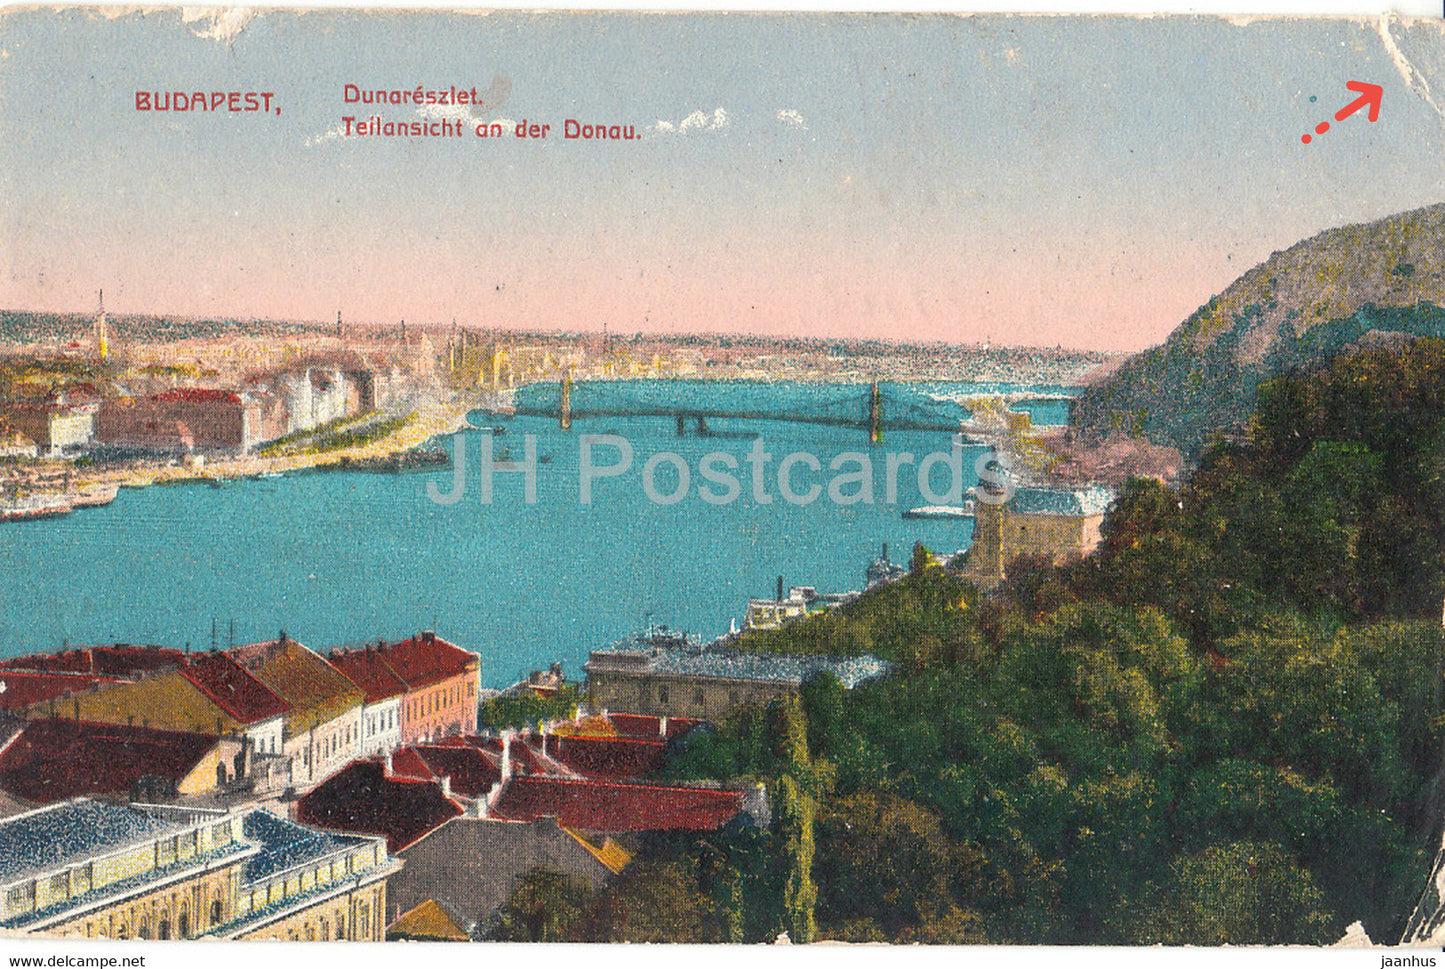 Budapest - Dunareszlet - Teilansicht an der Donau - S B Stab 27 Feld Art Brig  Feldpost - old postcard - Hungary - used - JH Postcards